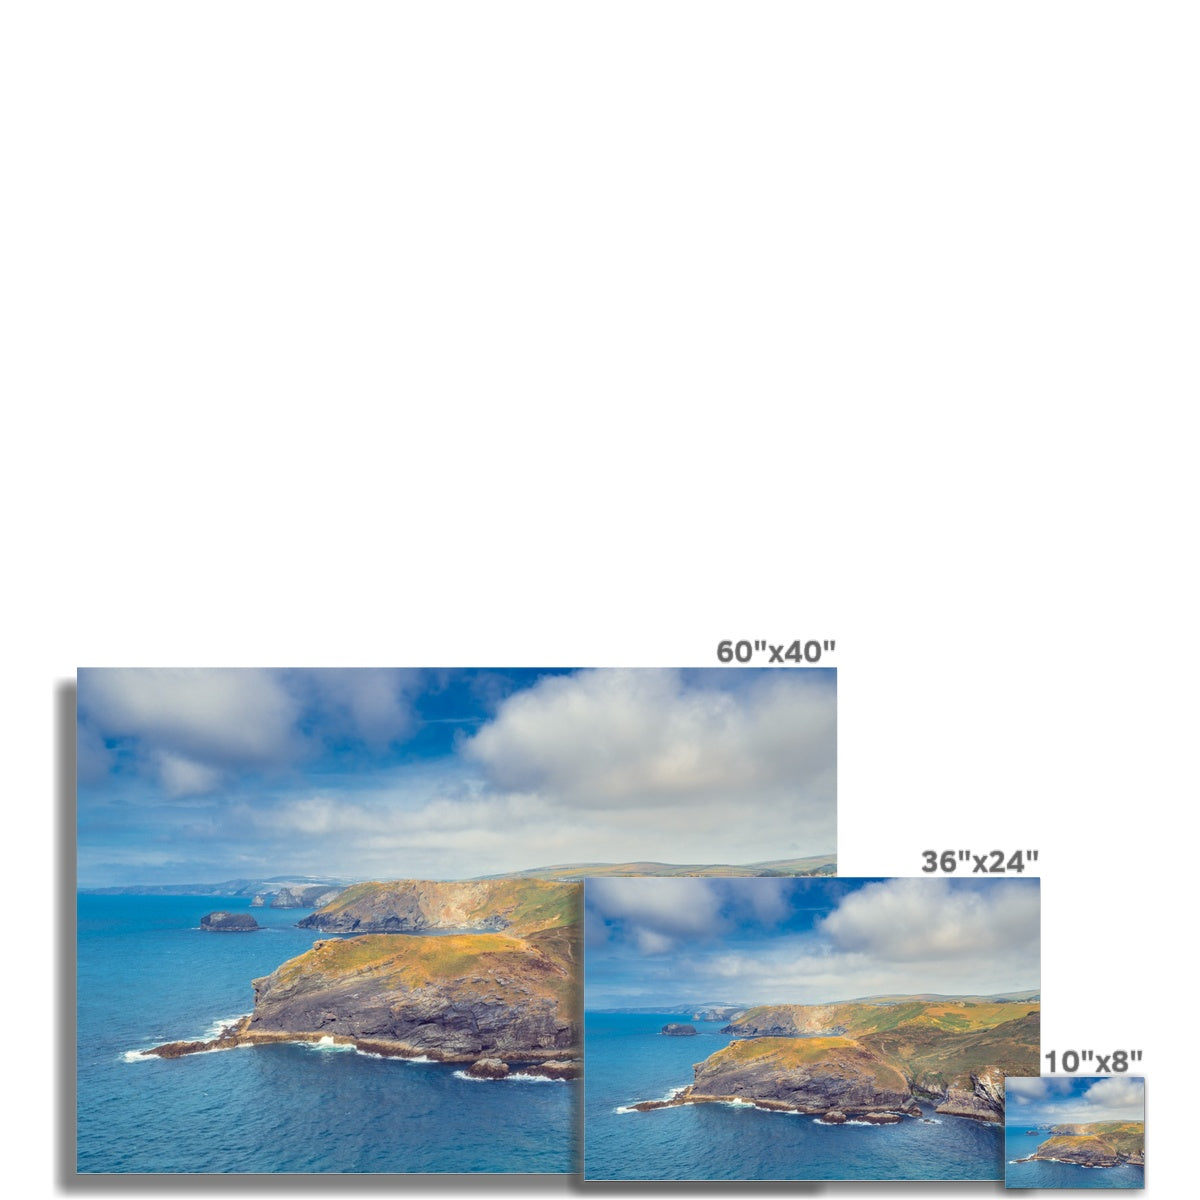 tintagel castle island picture sizes